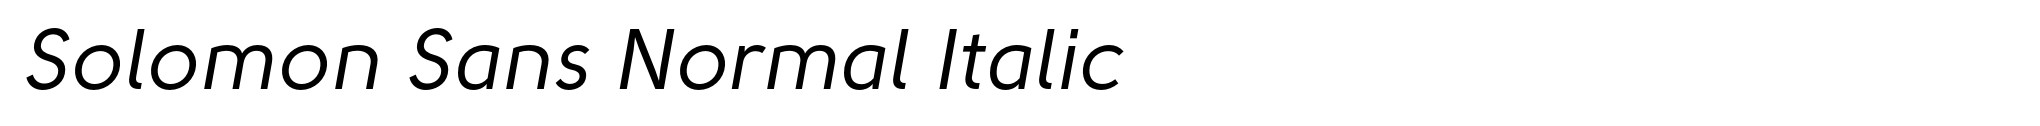 Solomon Sans Normal Italic image